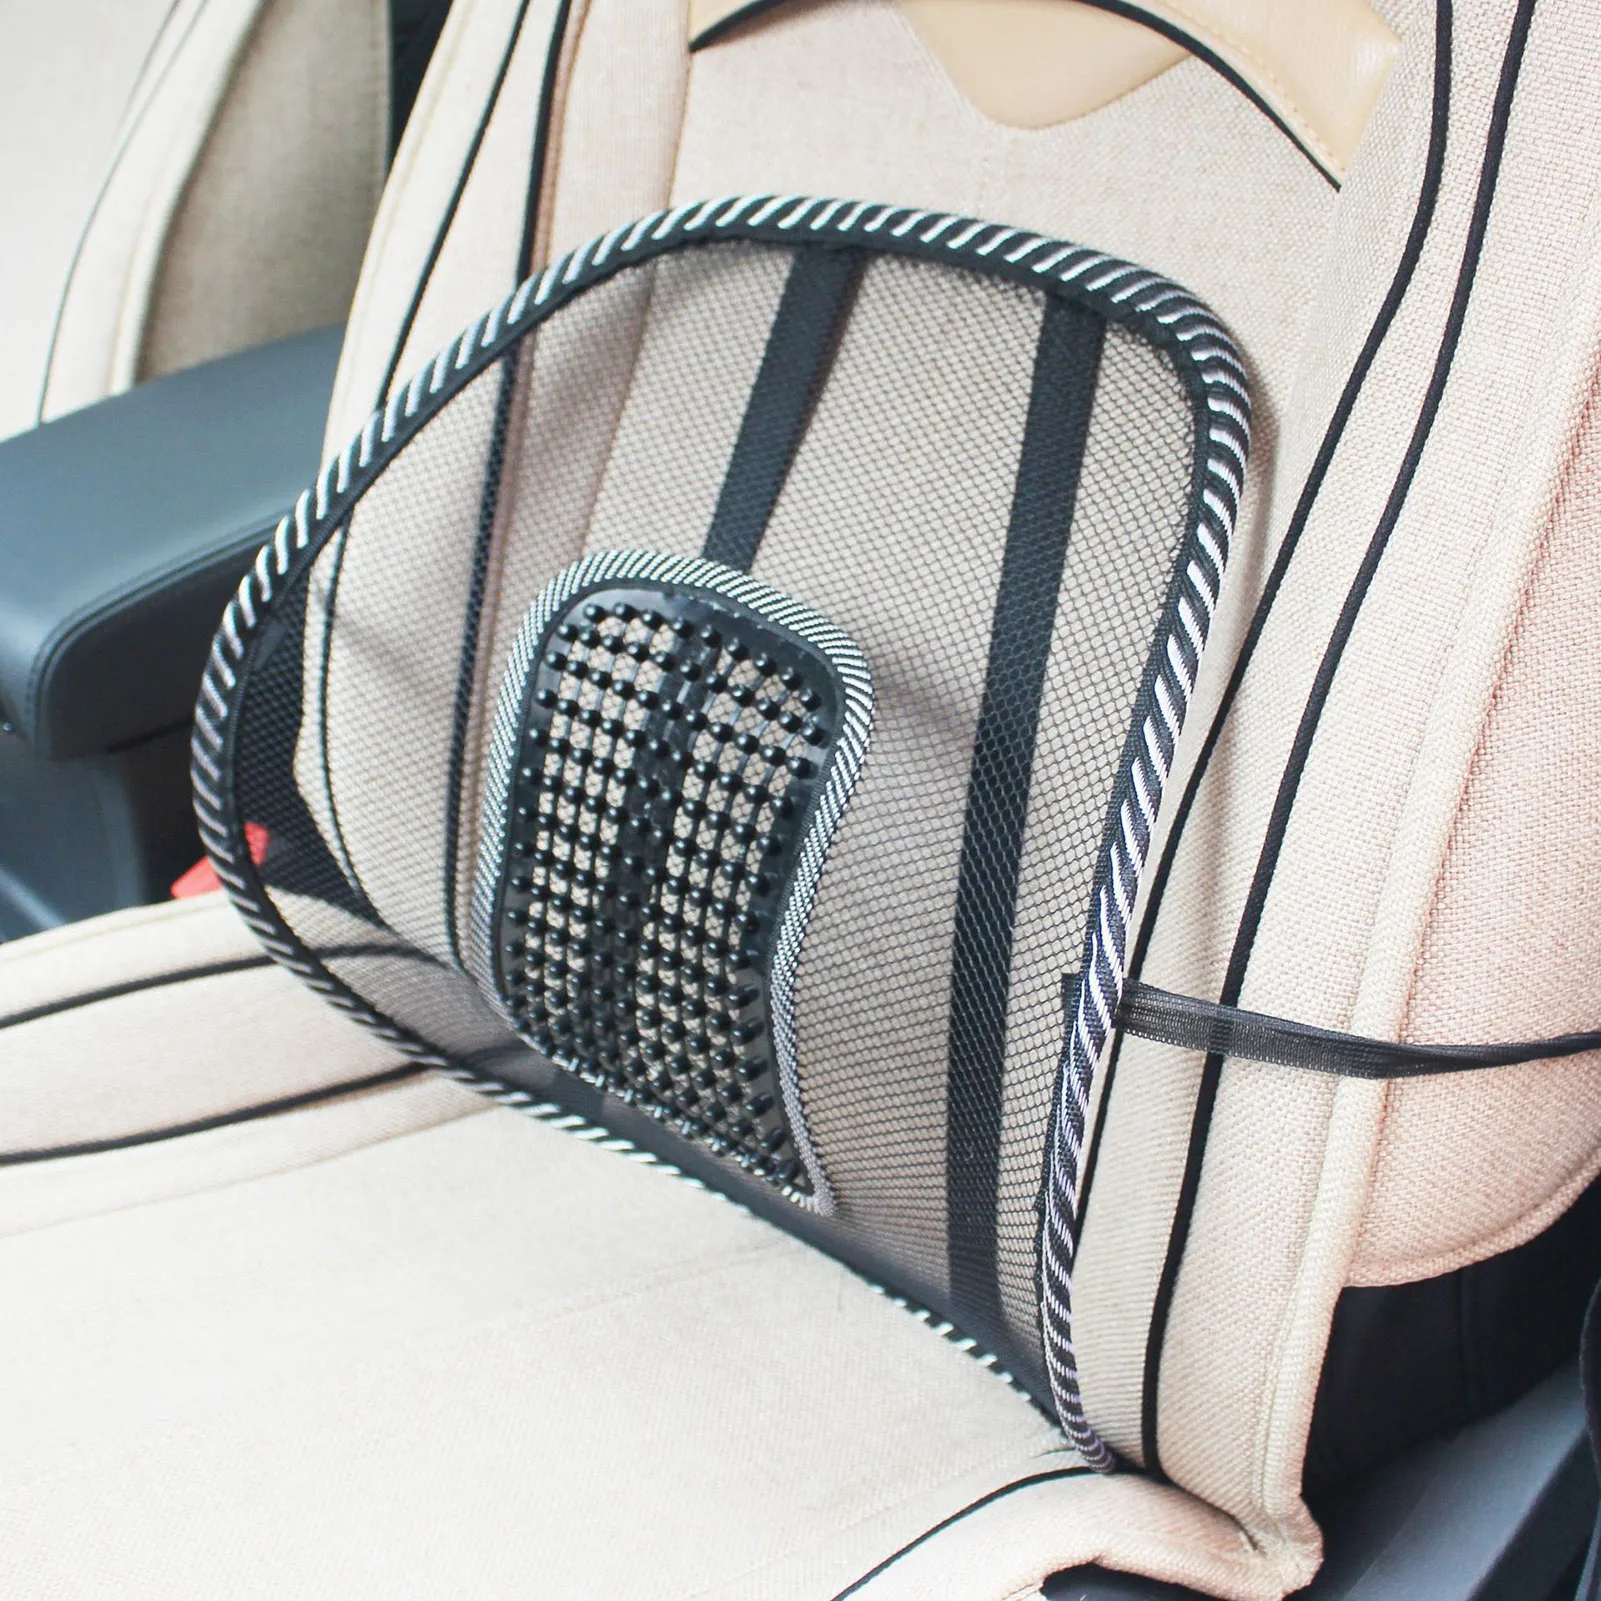 https://ae01.alicdn.com/kf/Ha787284332c948da8ca534afed71f46d9/Breathable-Mesh-Car-Chair-Seat-Back-Support-Massage-Cushion-Lumbar-Brace-Pad-Car-Seat-Cushion.jpg